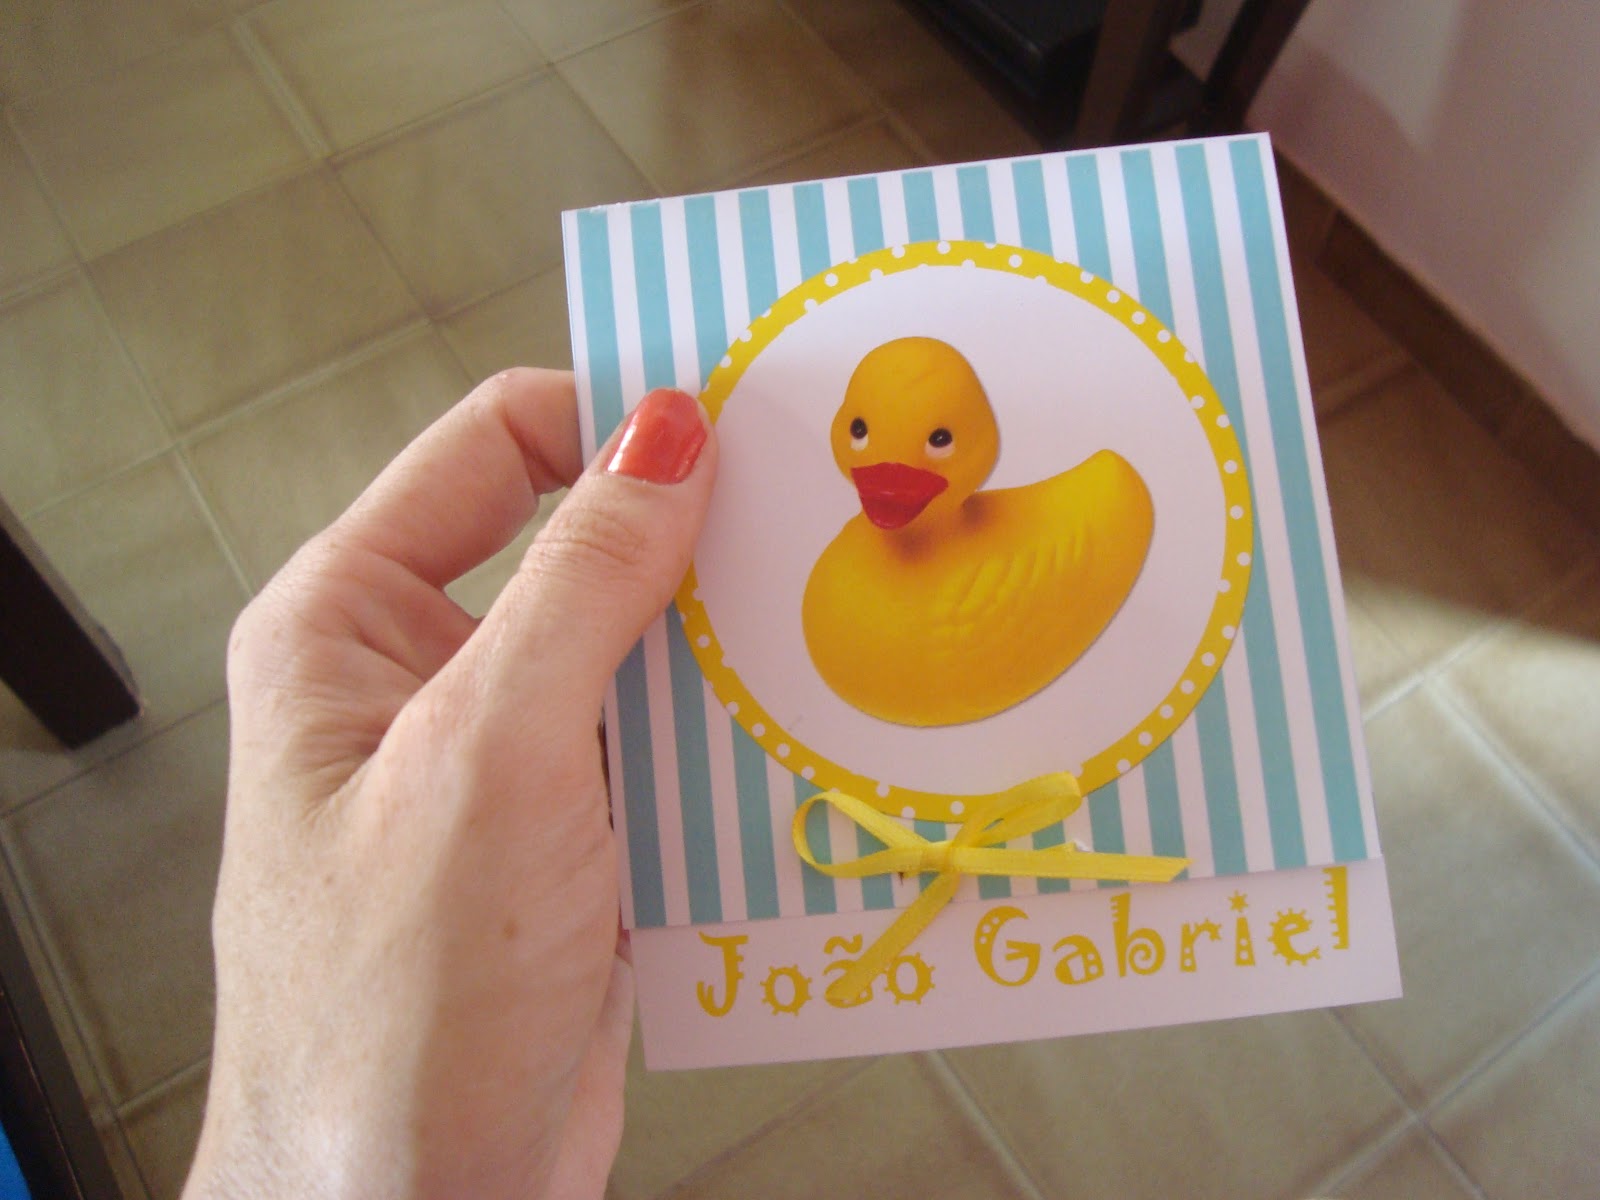 Convite Aniversário Patinho de Borracha Imprimir Rubber Duck